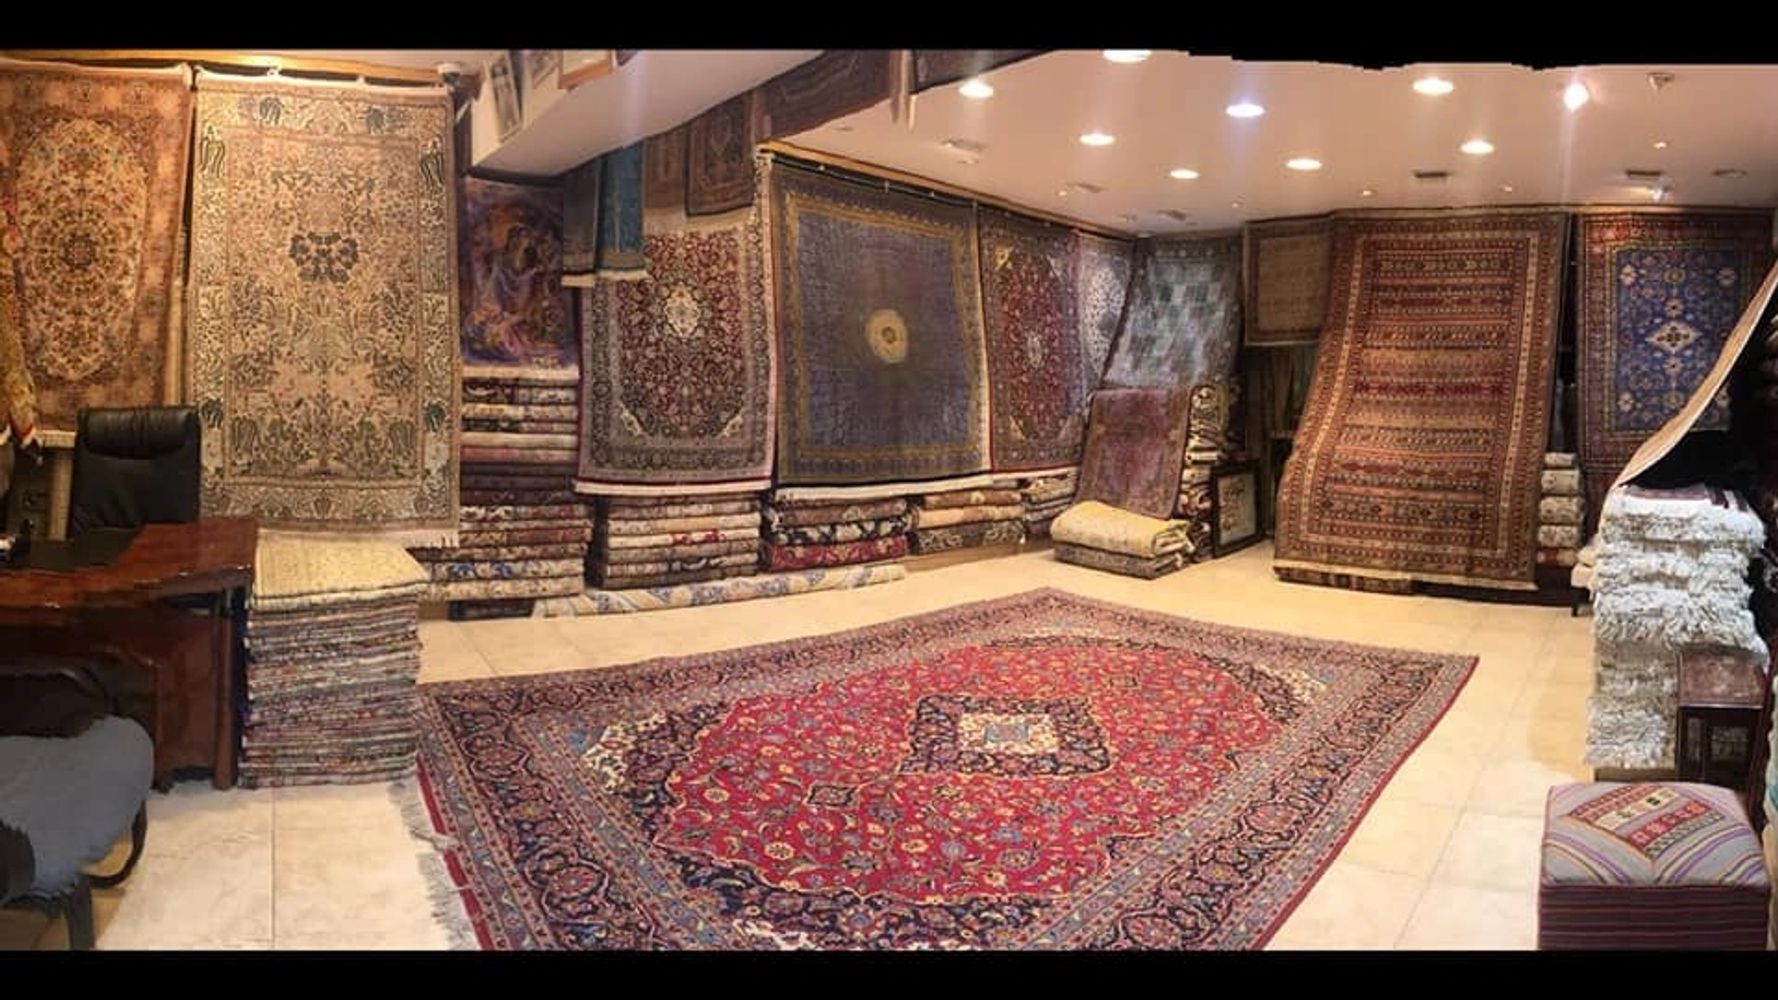 Sheba Iranian Carpets Stores main Showroom with Persian carpets on display. 